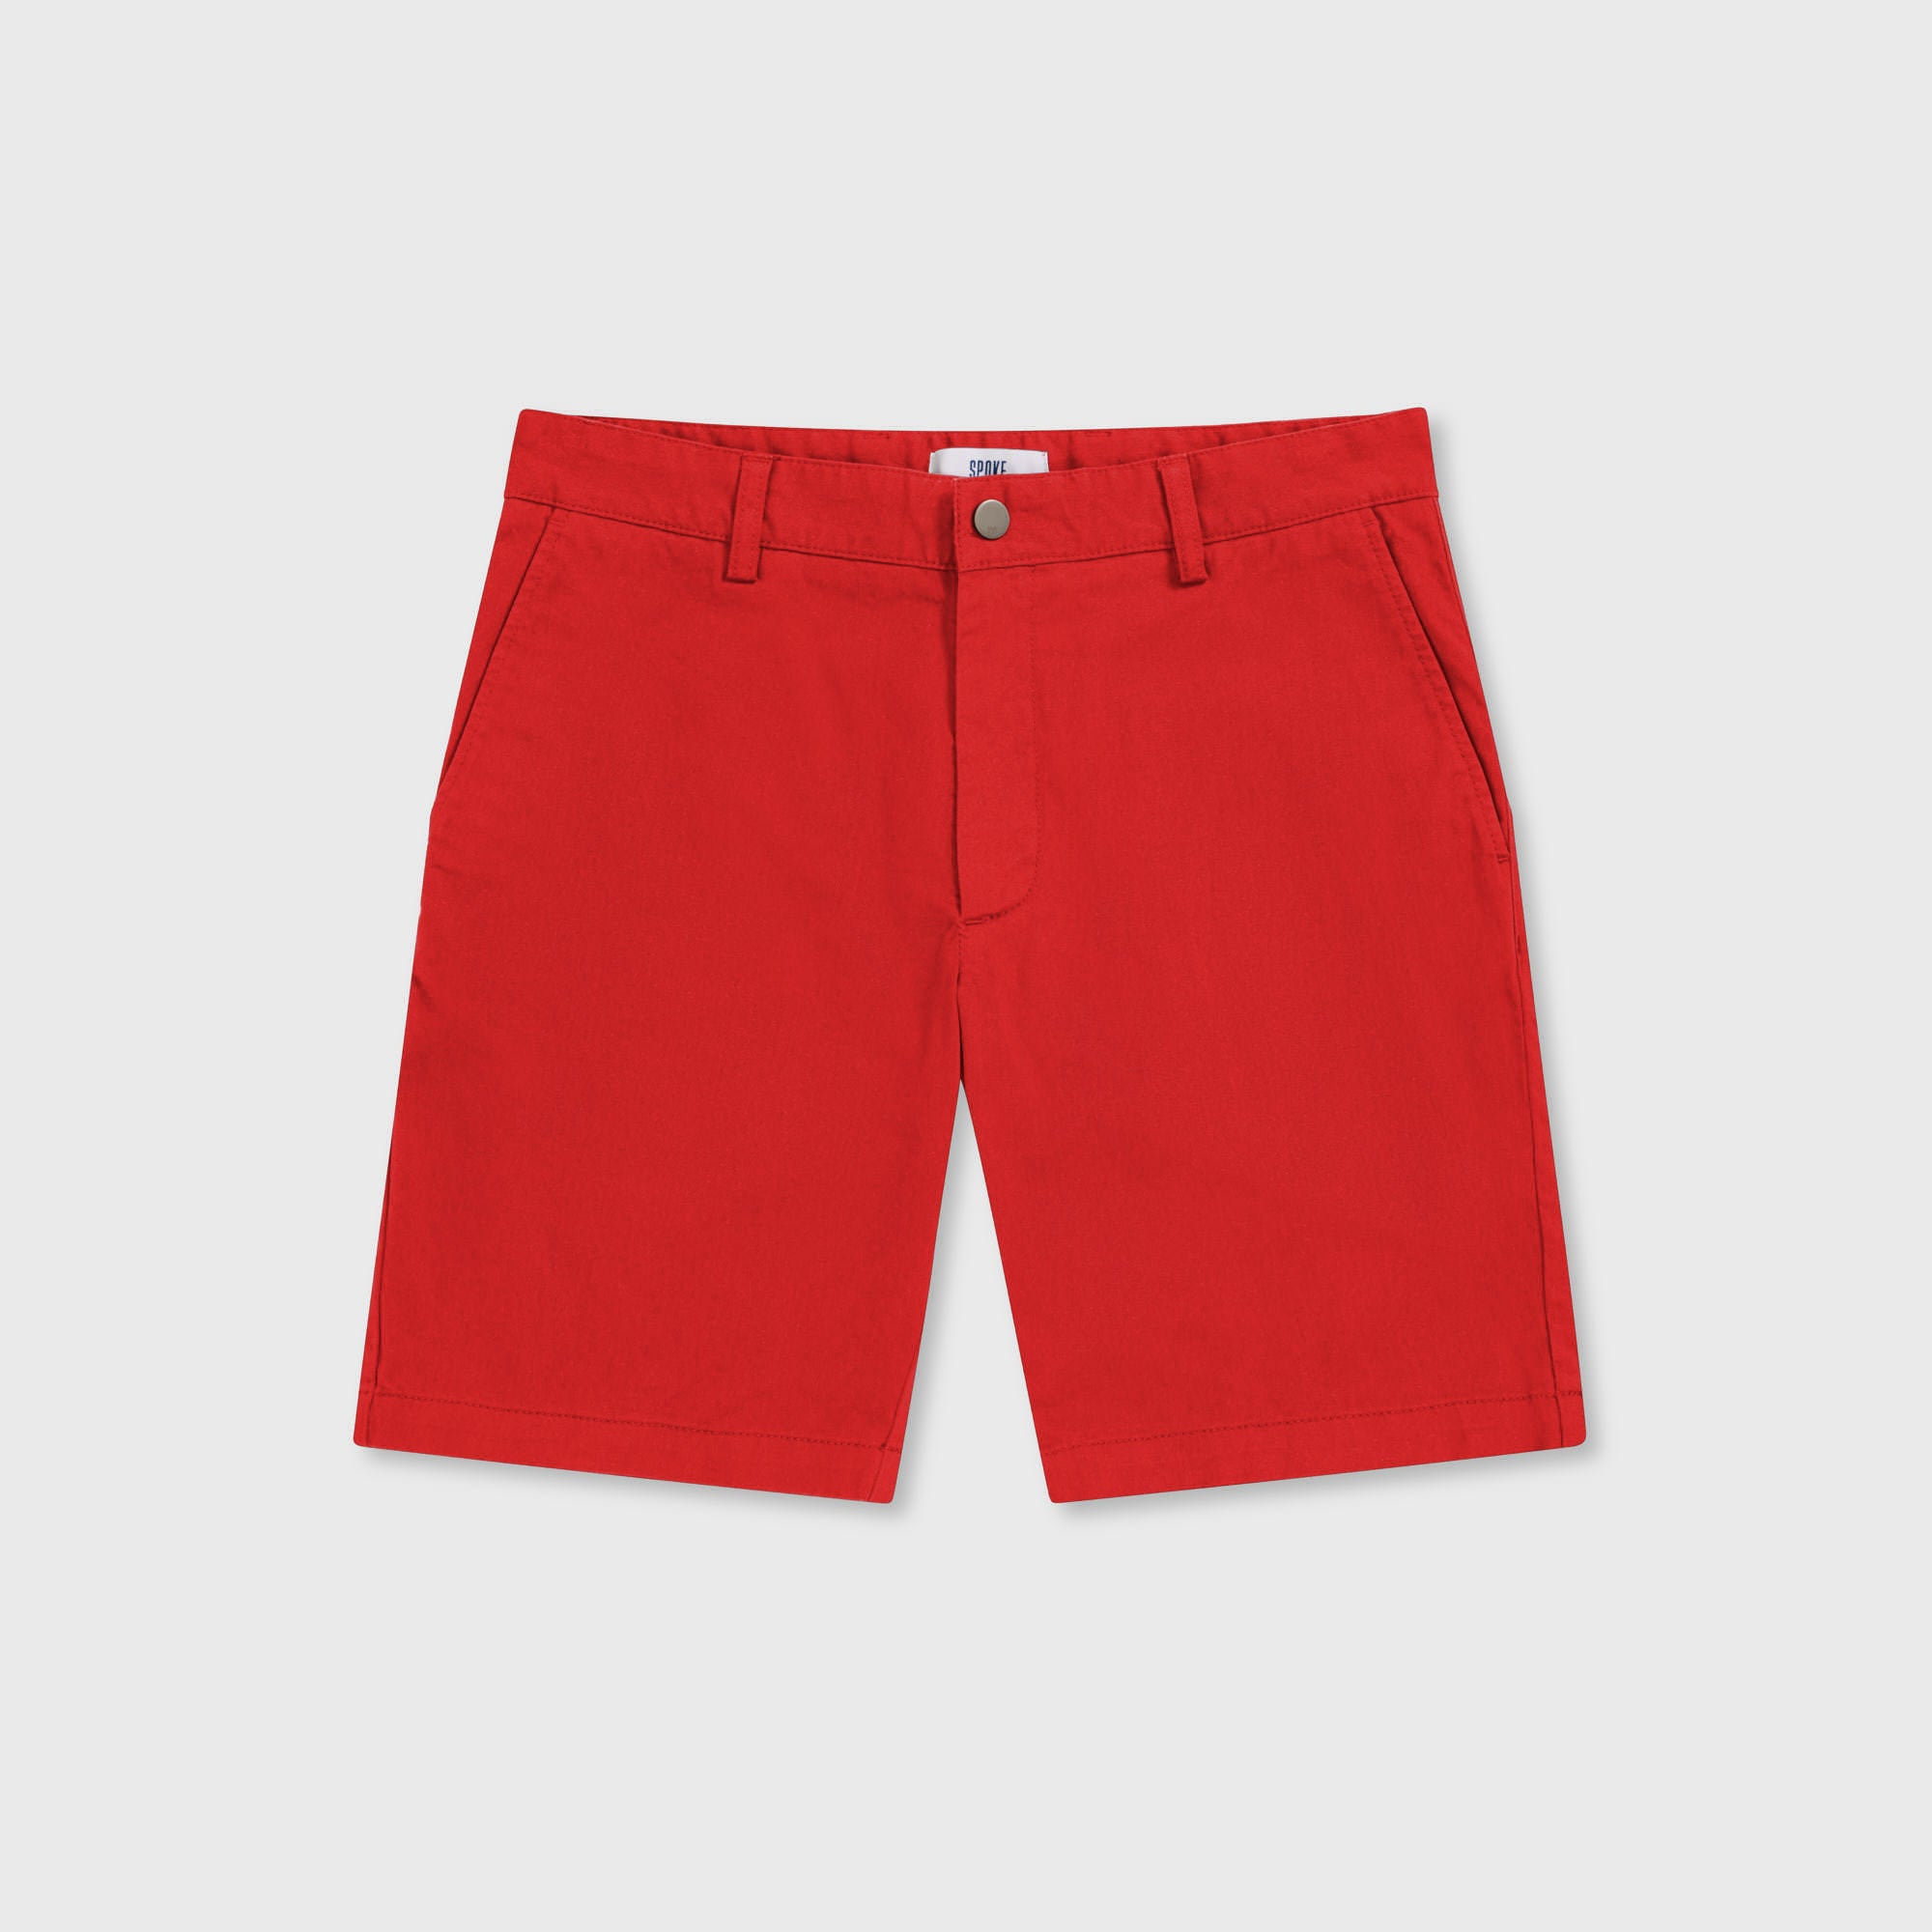 Oxblood Red Shorts - Men's Tailored Shorts - SPOKE - SPOKE